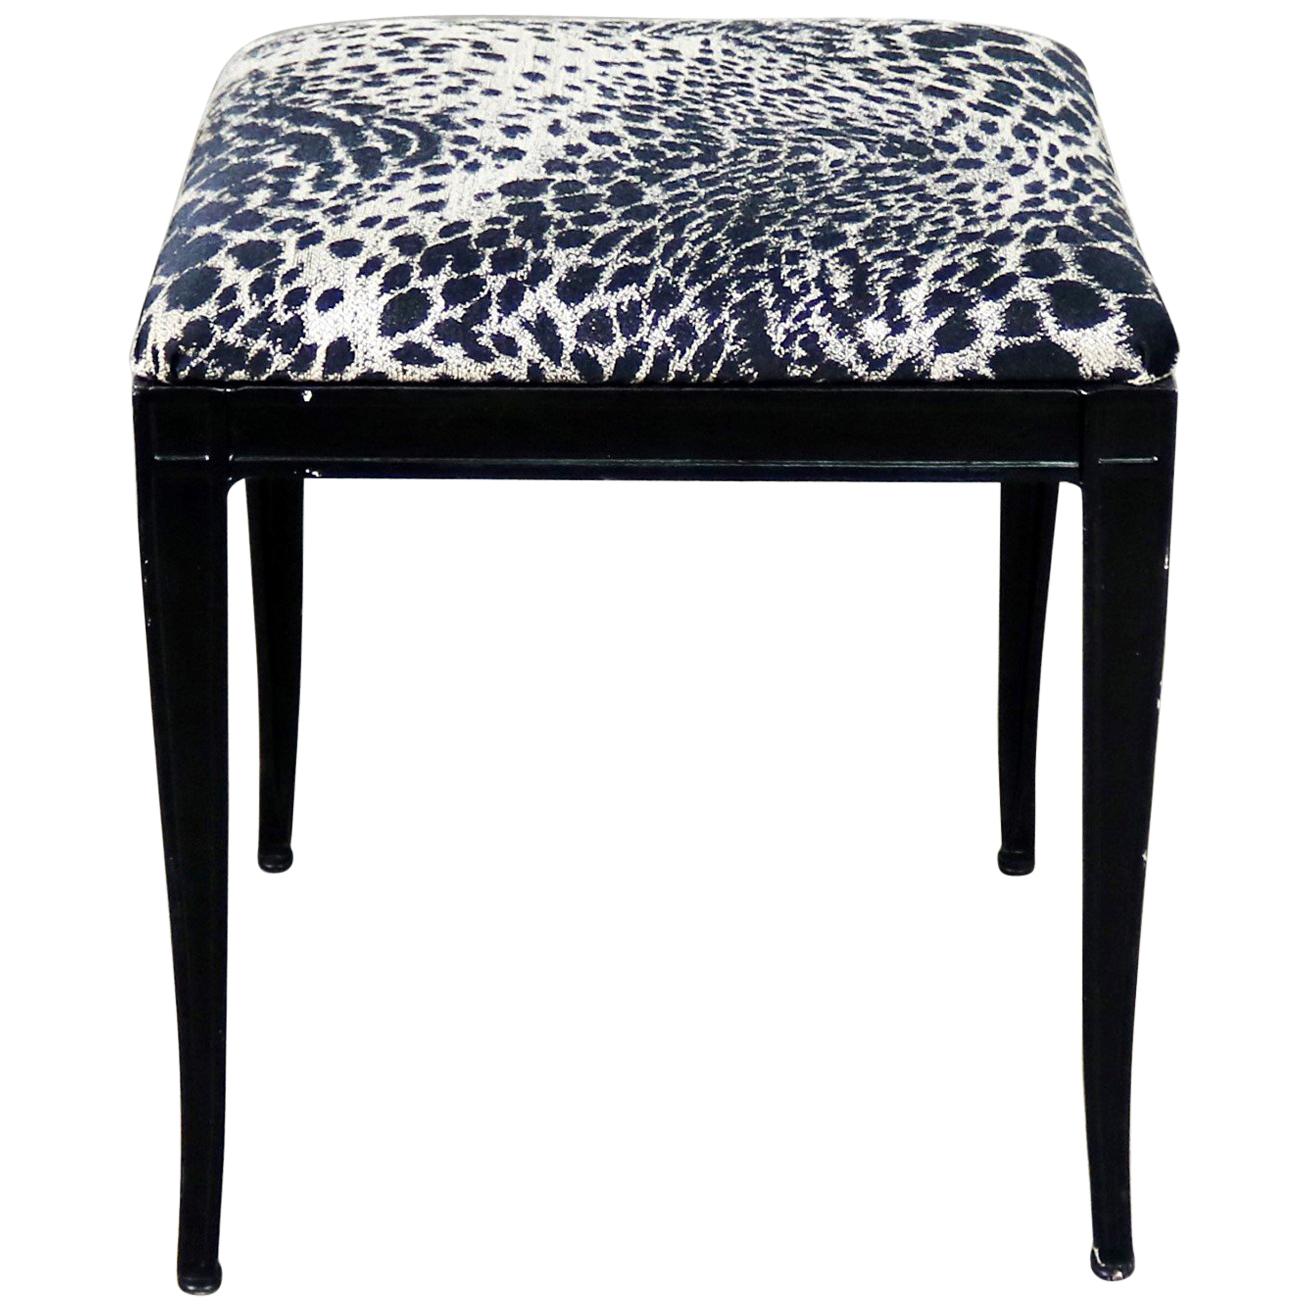 Black Art Deco and Animal Print Bench Ottoman Footstool Cast Aluminum by Crucibl